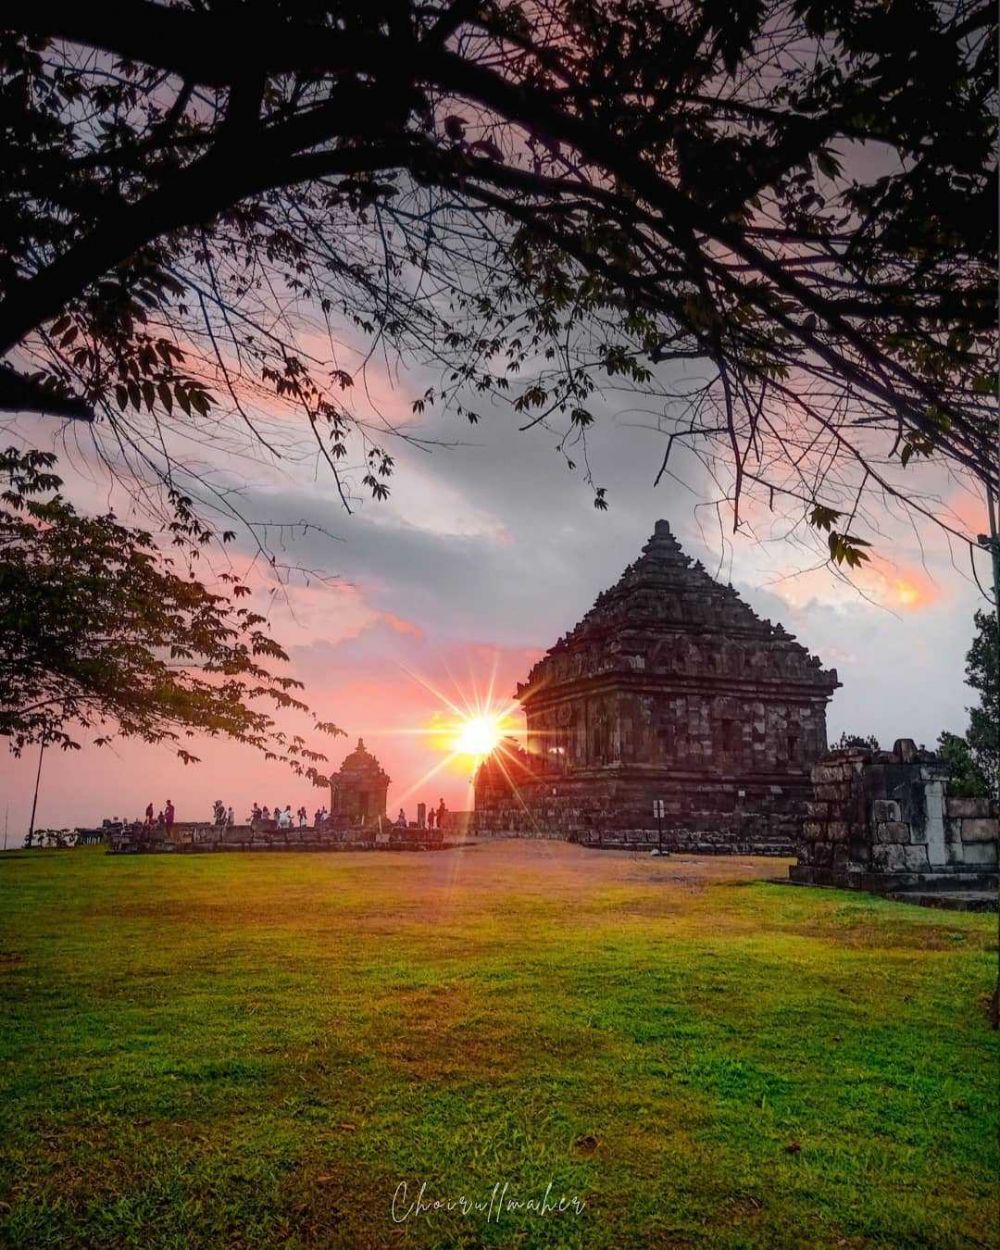 5 Wisata Dataran Tinggi di Yogyakarta dengan View Sunset Memukau